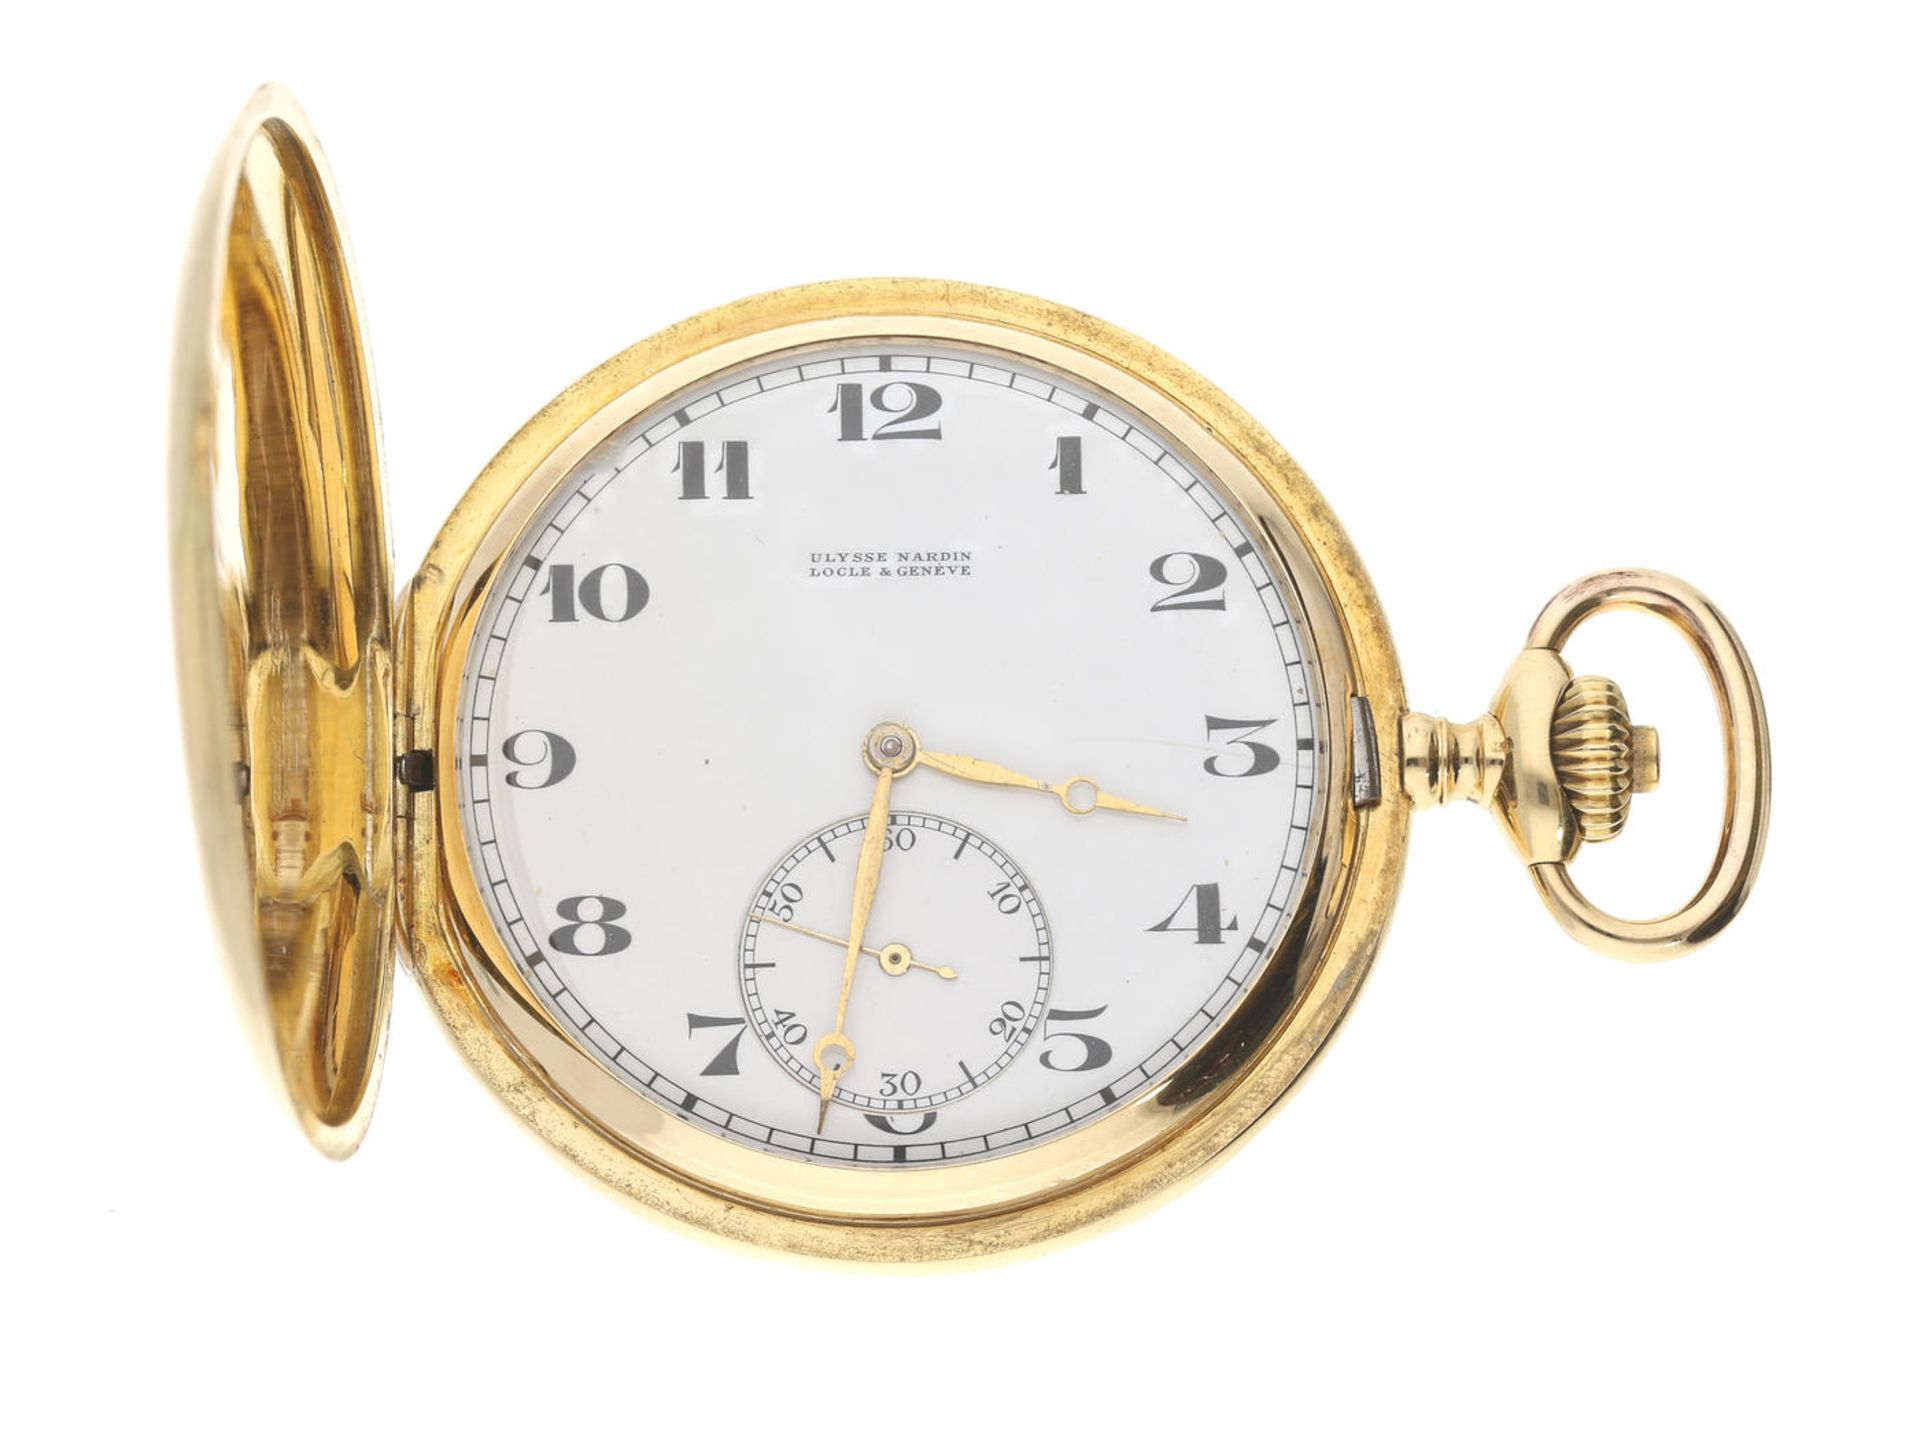 Taschenuhr: hochwertige Ulysse Nardin Goldsavonnette, um 1915 Ca. Ø52mm, ca. 91g, 18K Gold,